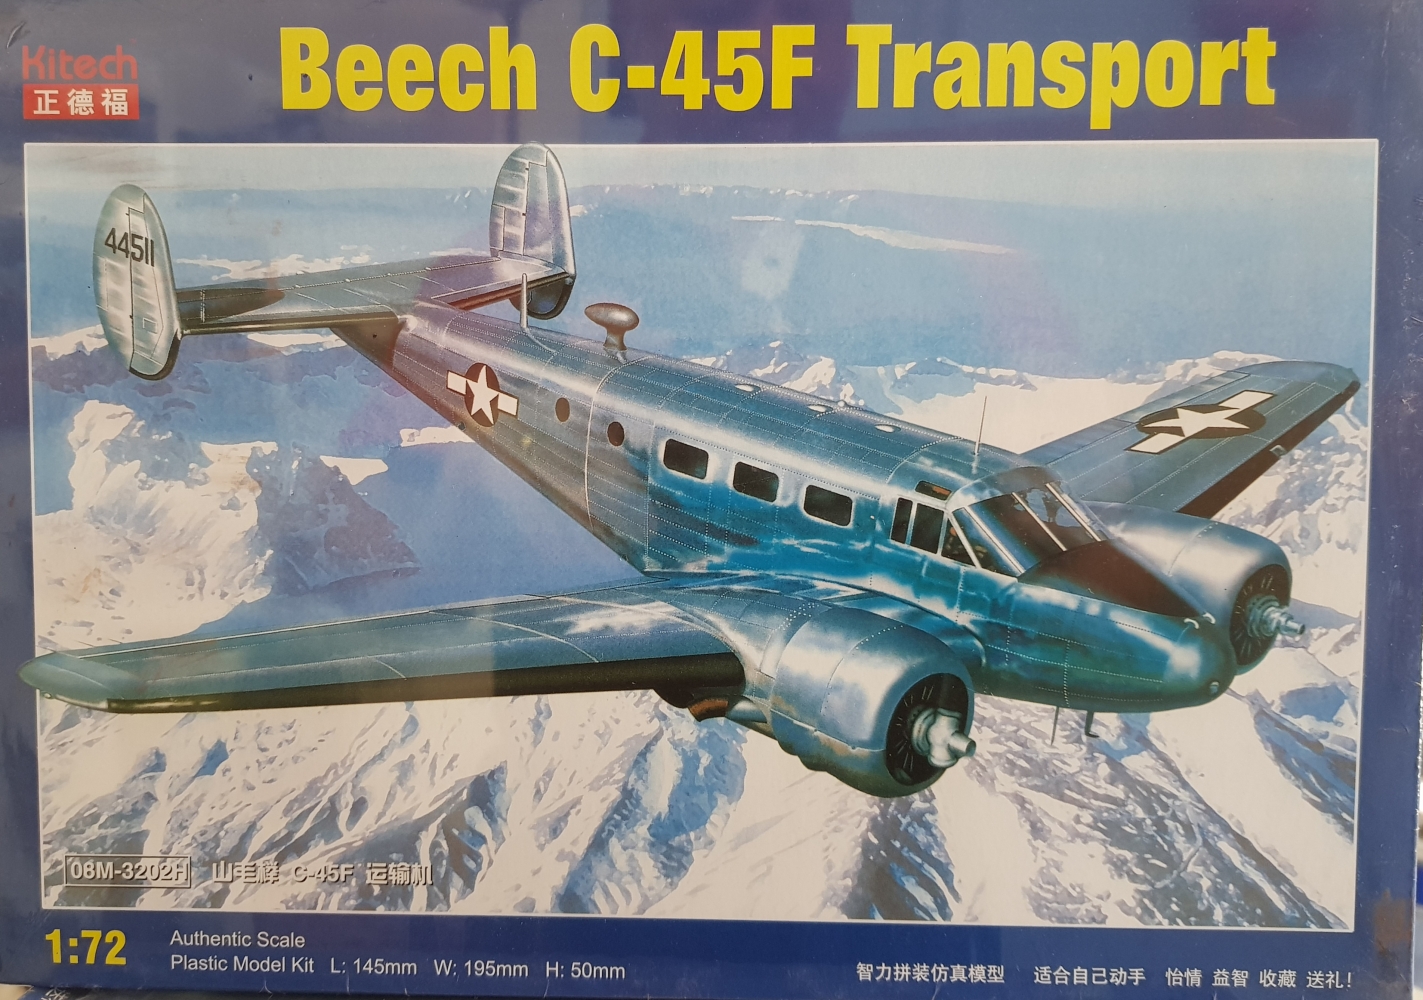 Beech C-45F